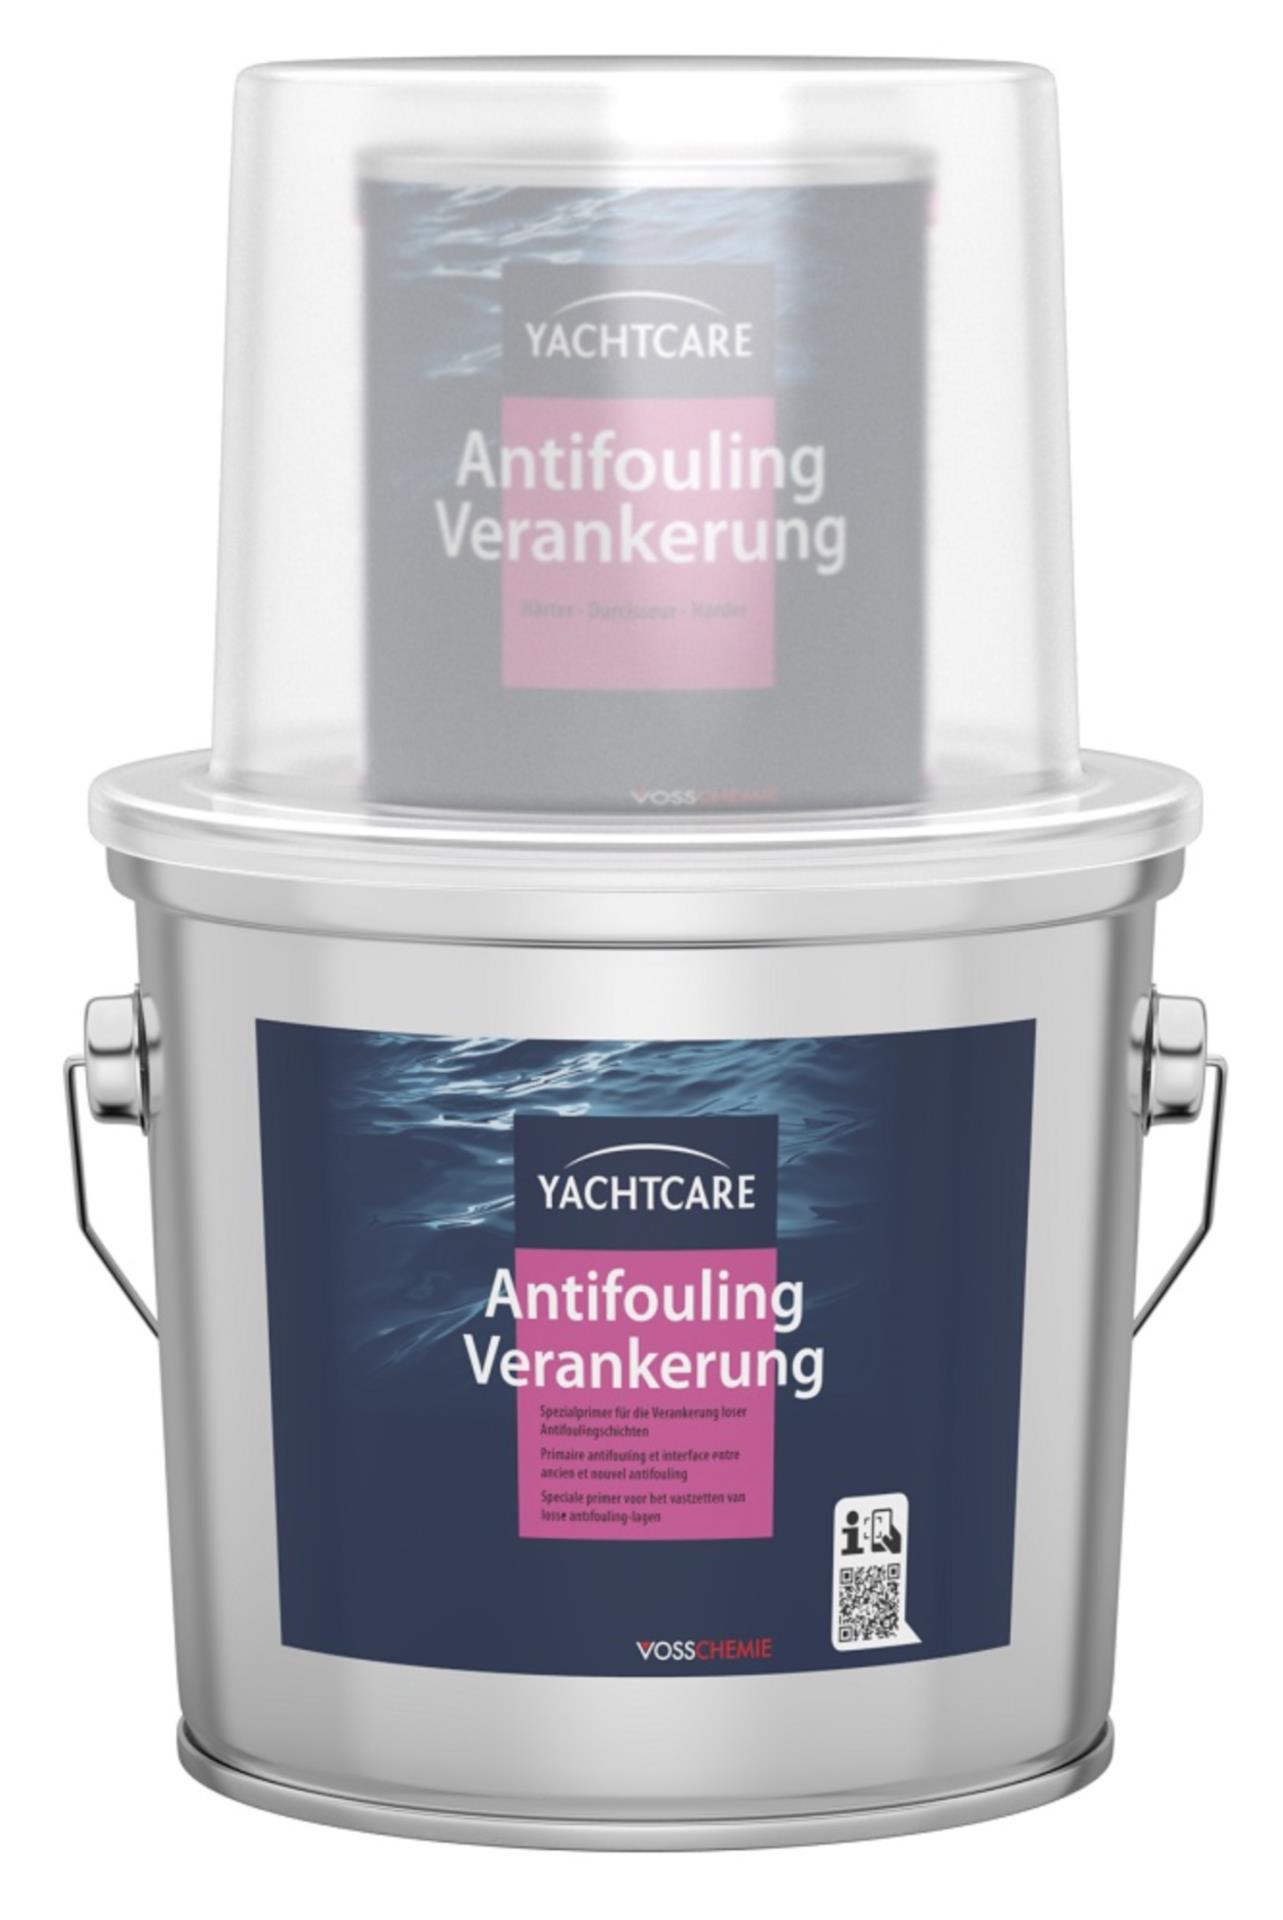 Yachtcare Antifouling Verankerung, 2,25 Liter